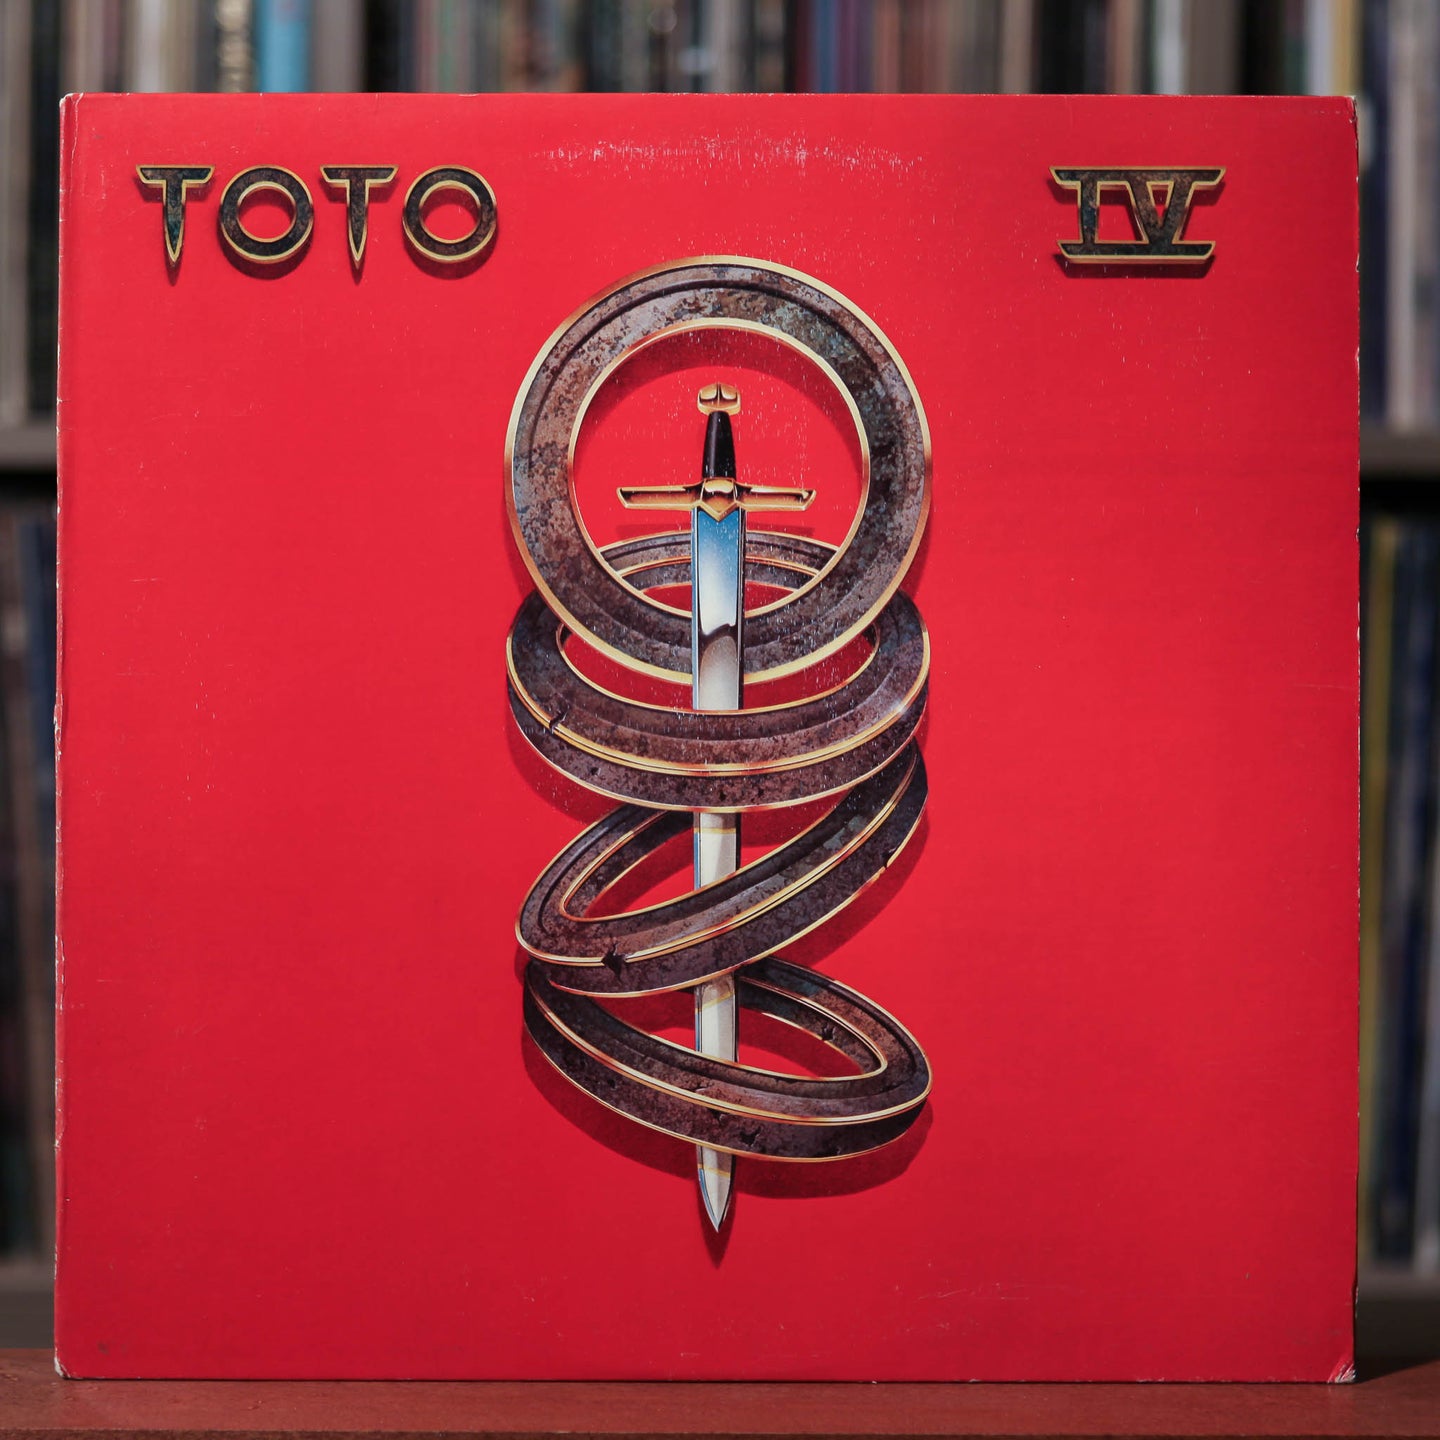 Toto - Toto IV - 1982 Columbia, VG+/VG